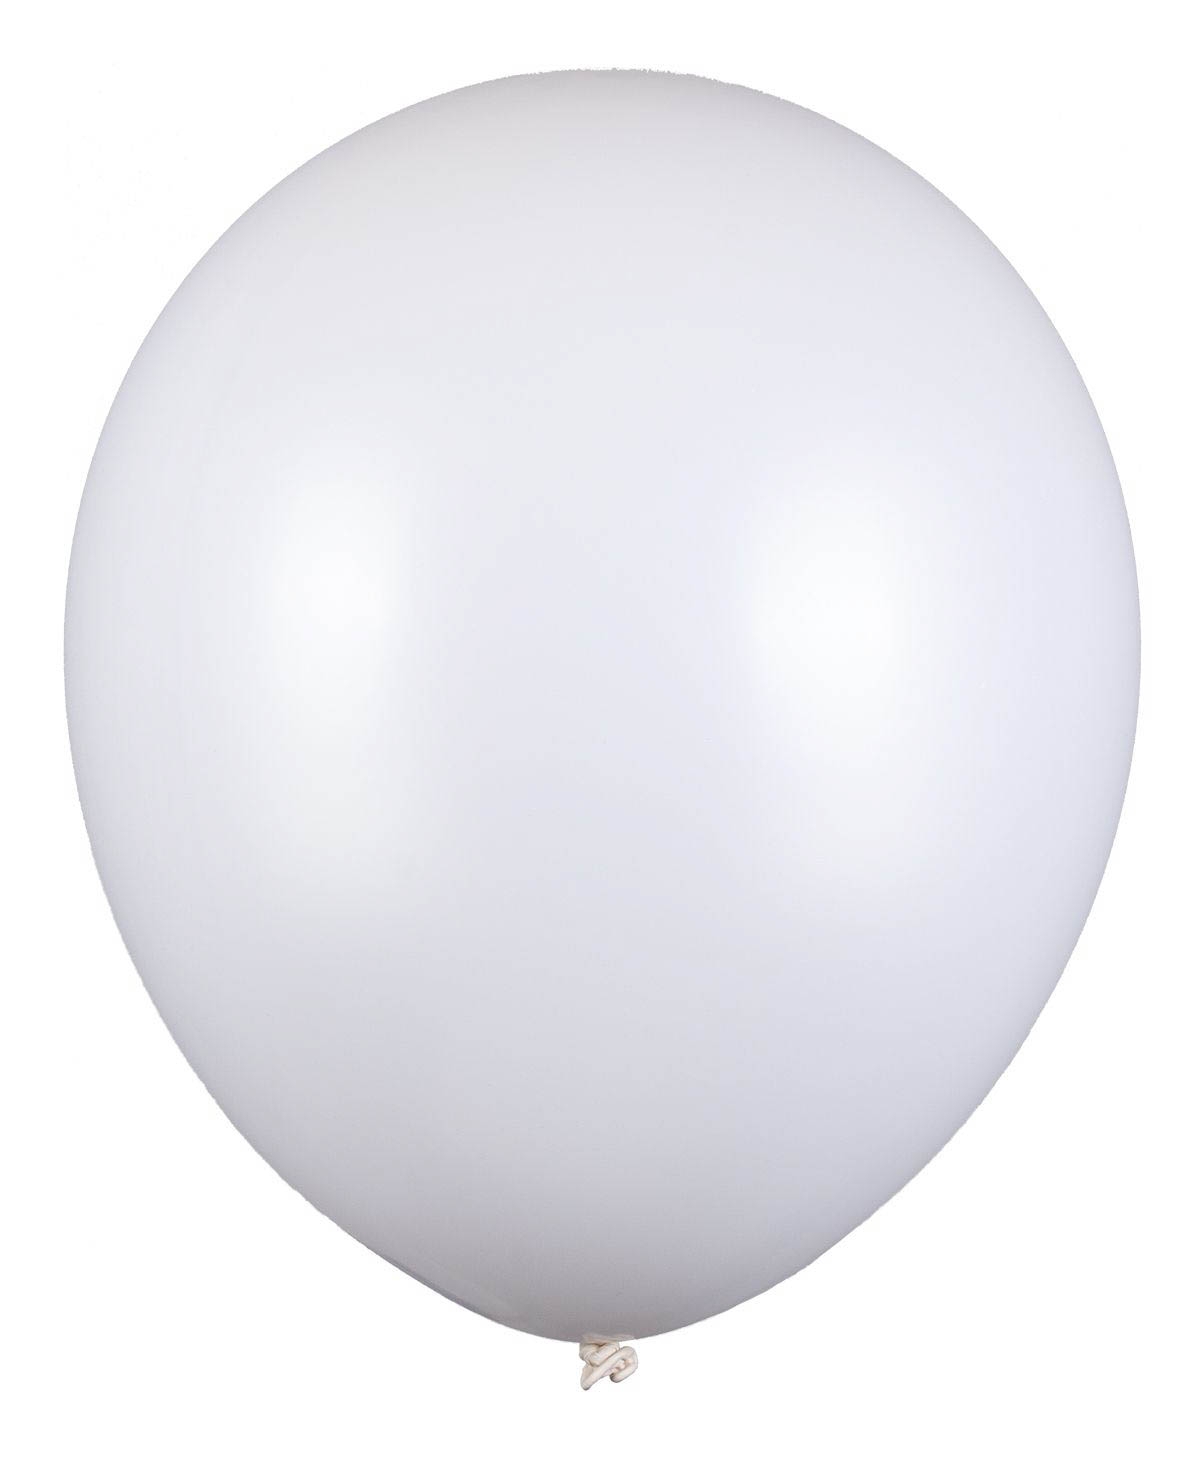 Latexballon Gigant Weiß Ø 60cm